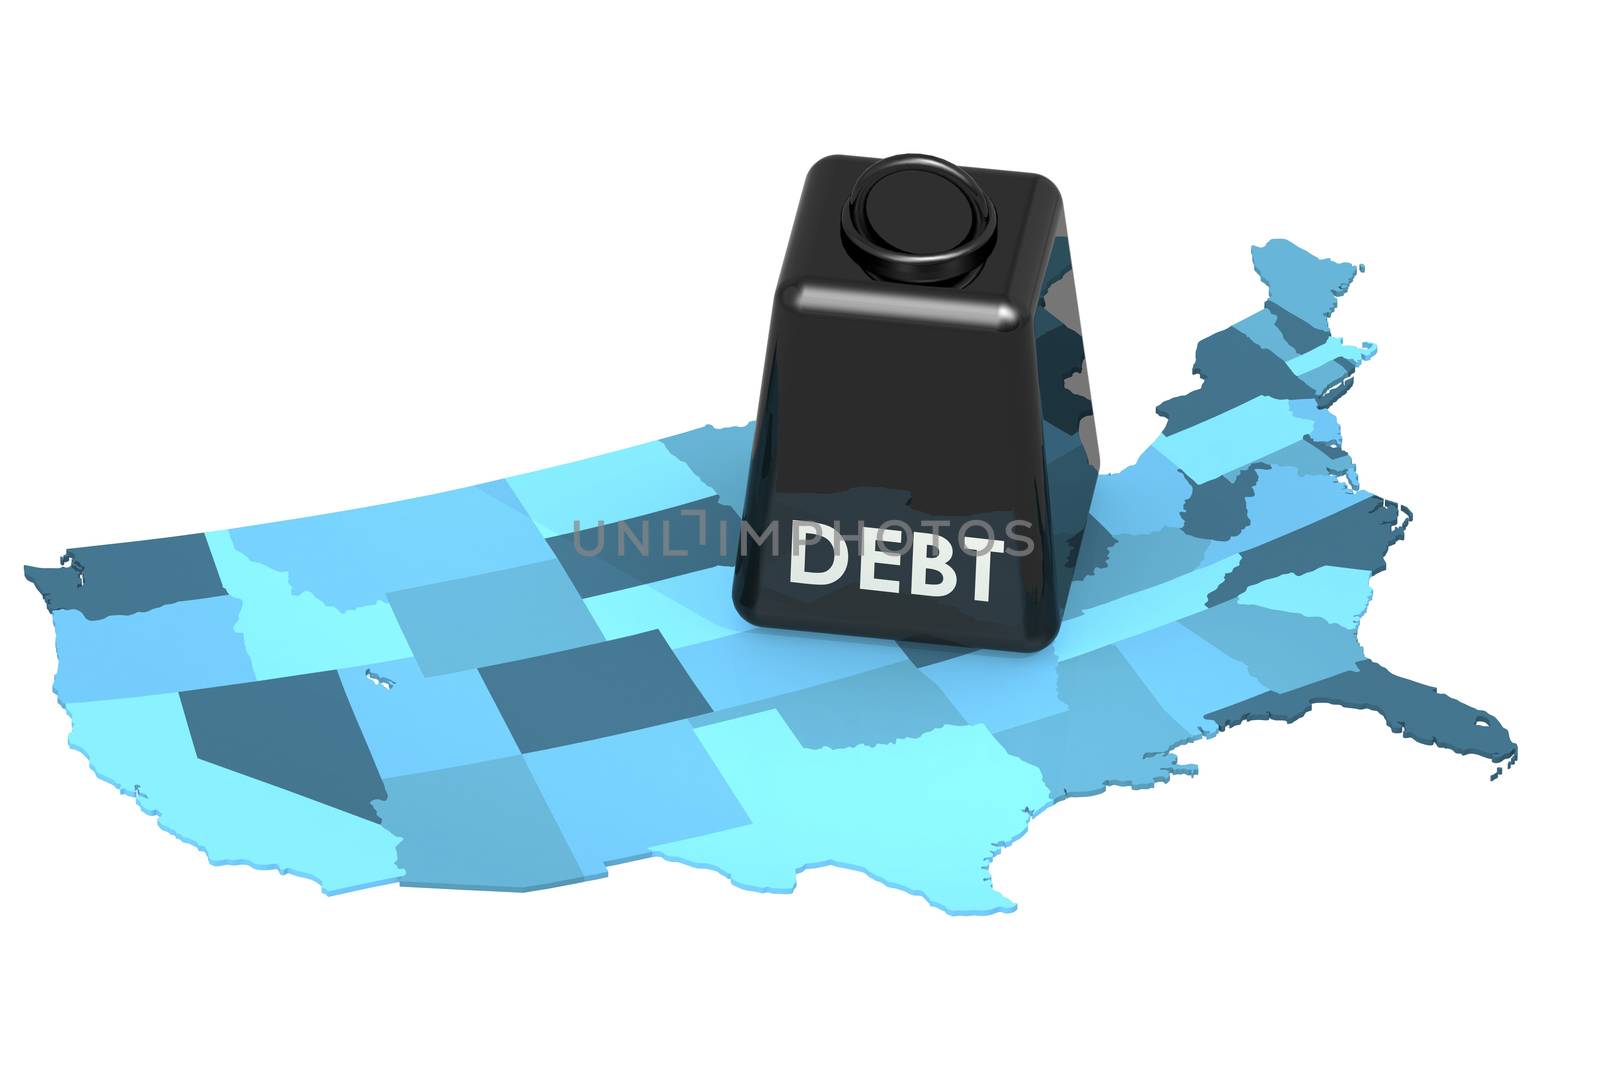 United States national debt or budget deficit financial crisis concept, 3D rendering